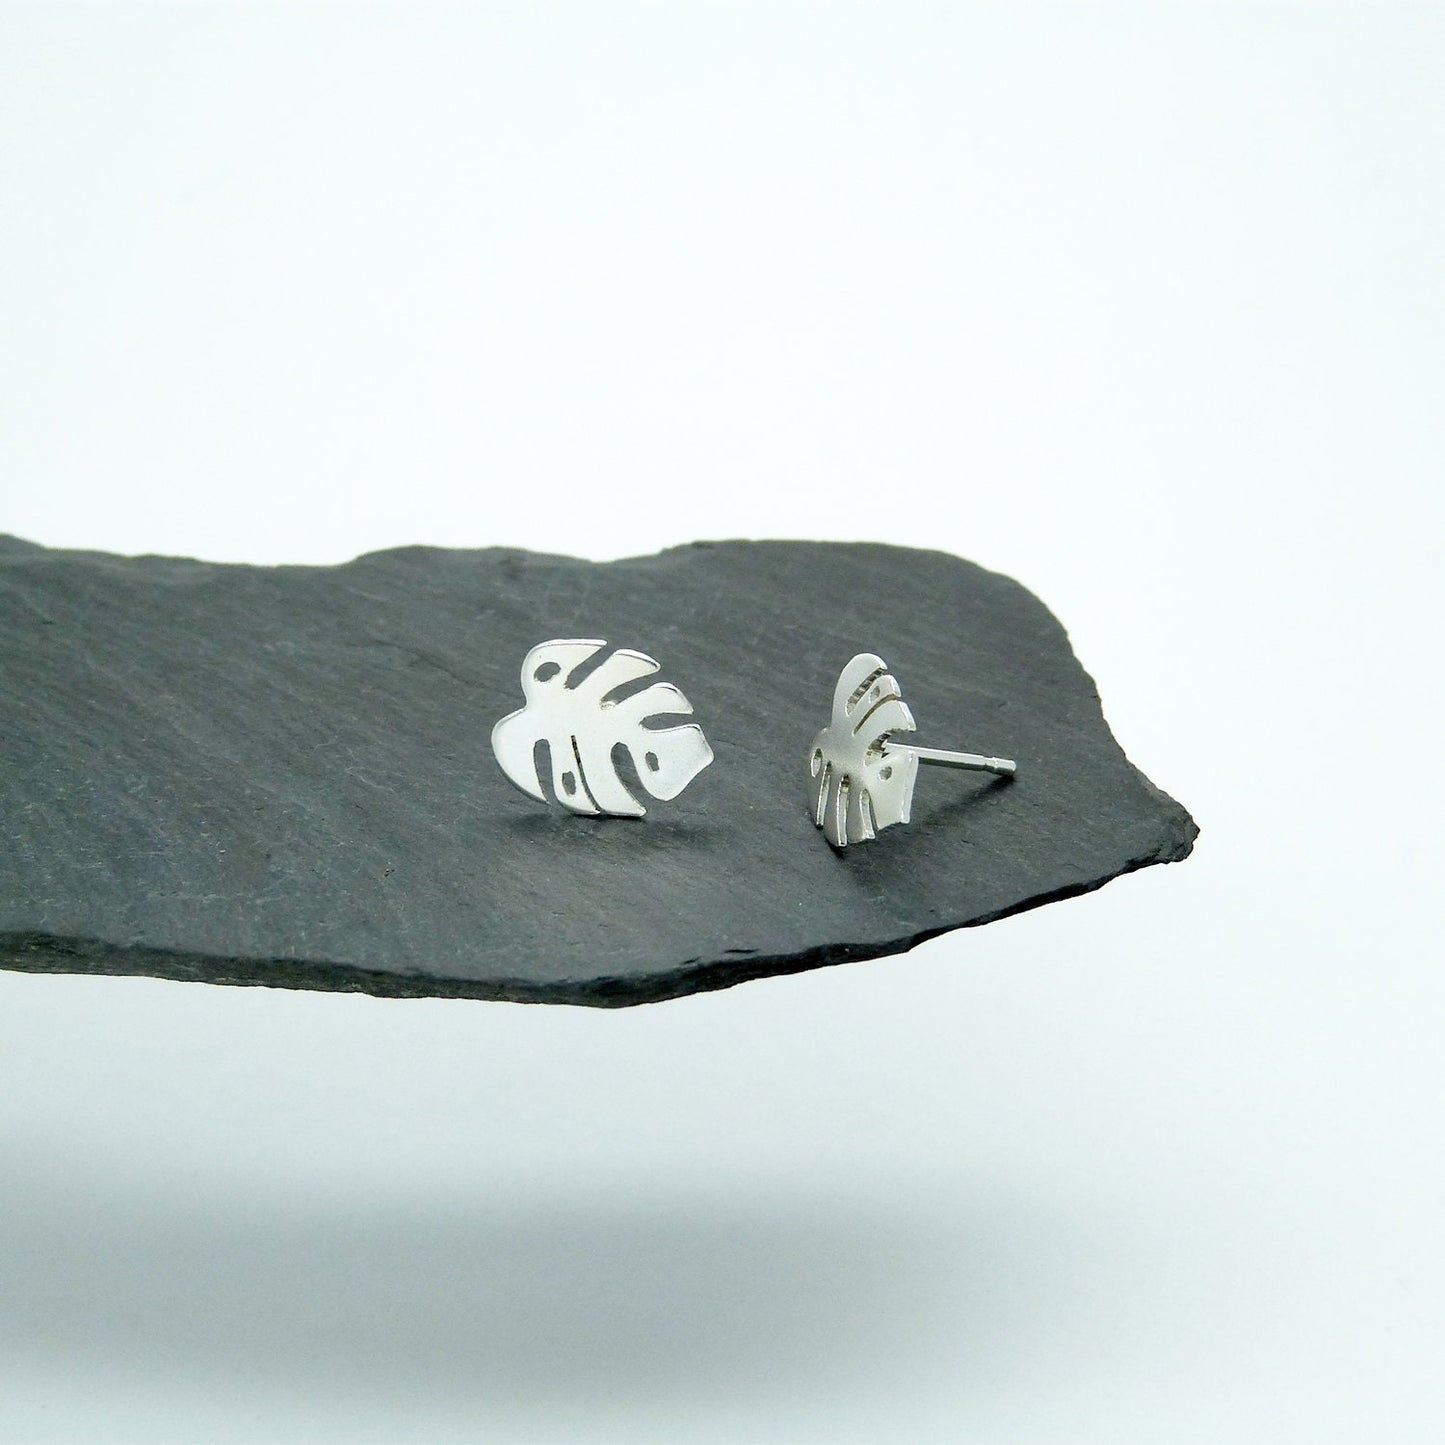 Monstera Deliciosa or Adam's Rib Leaves Earrings in 925 silver